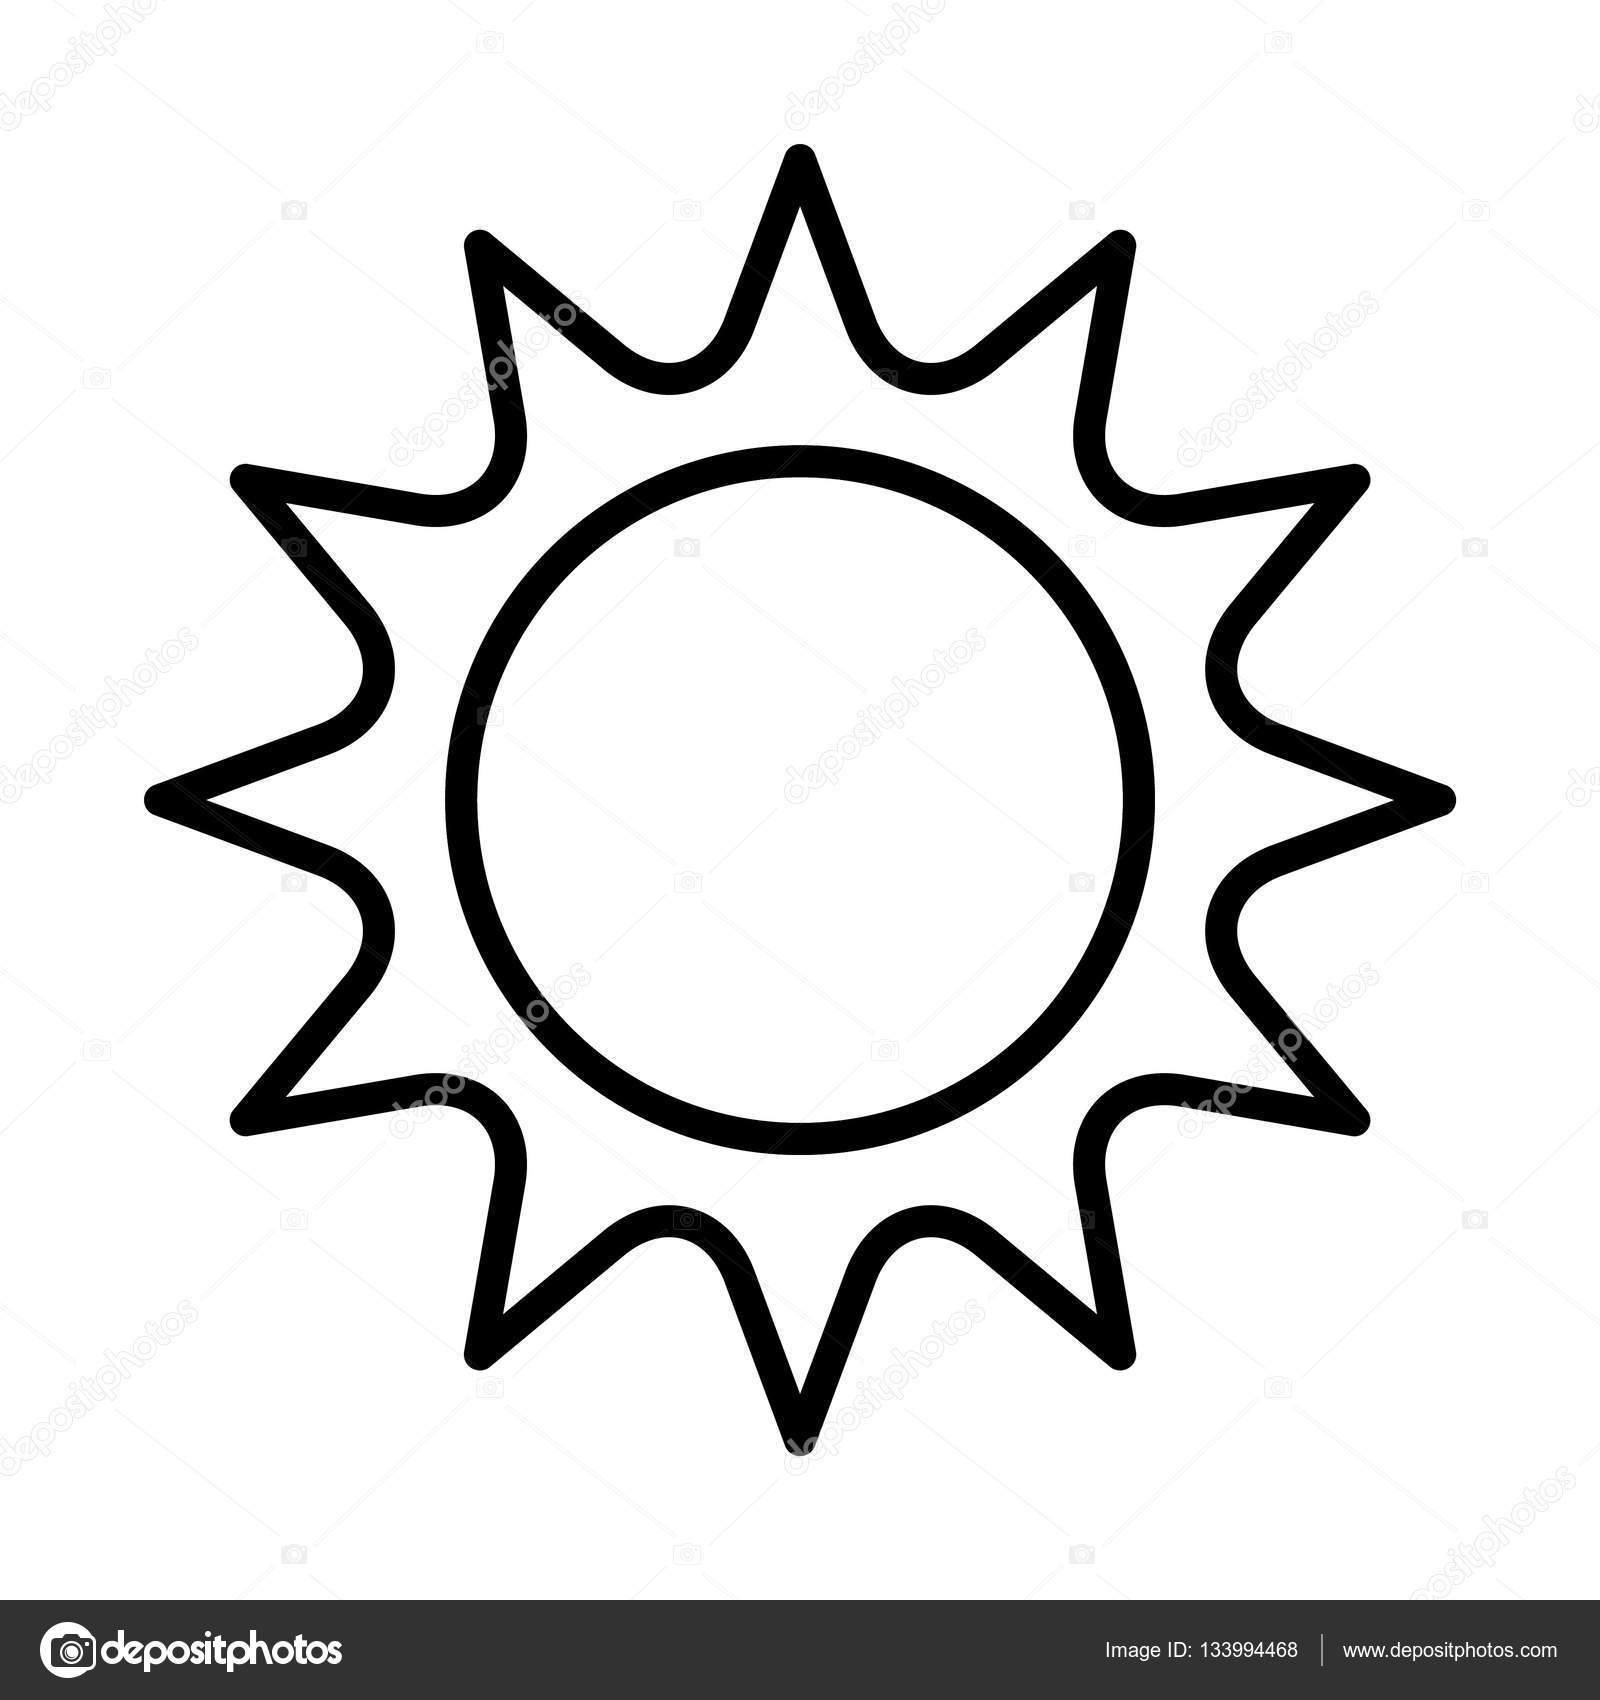 Simple sun drawing.